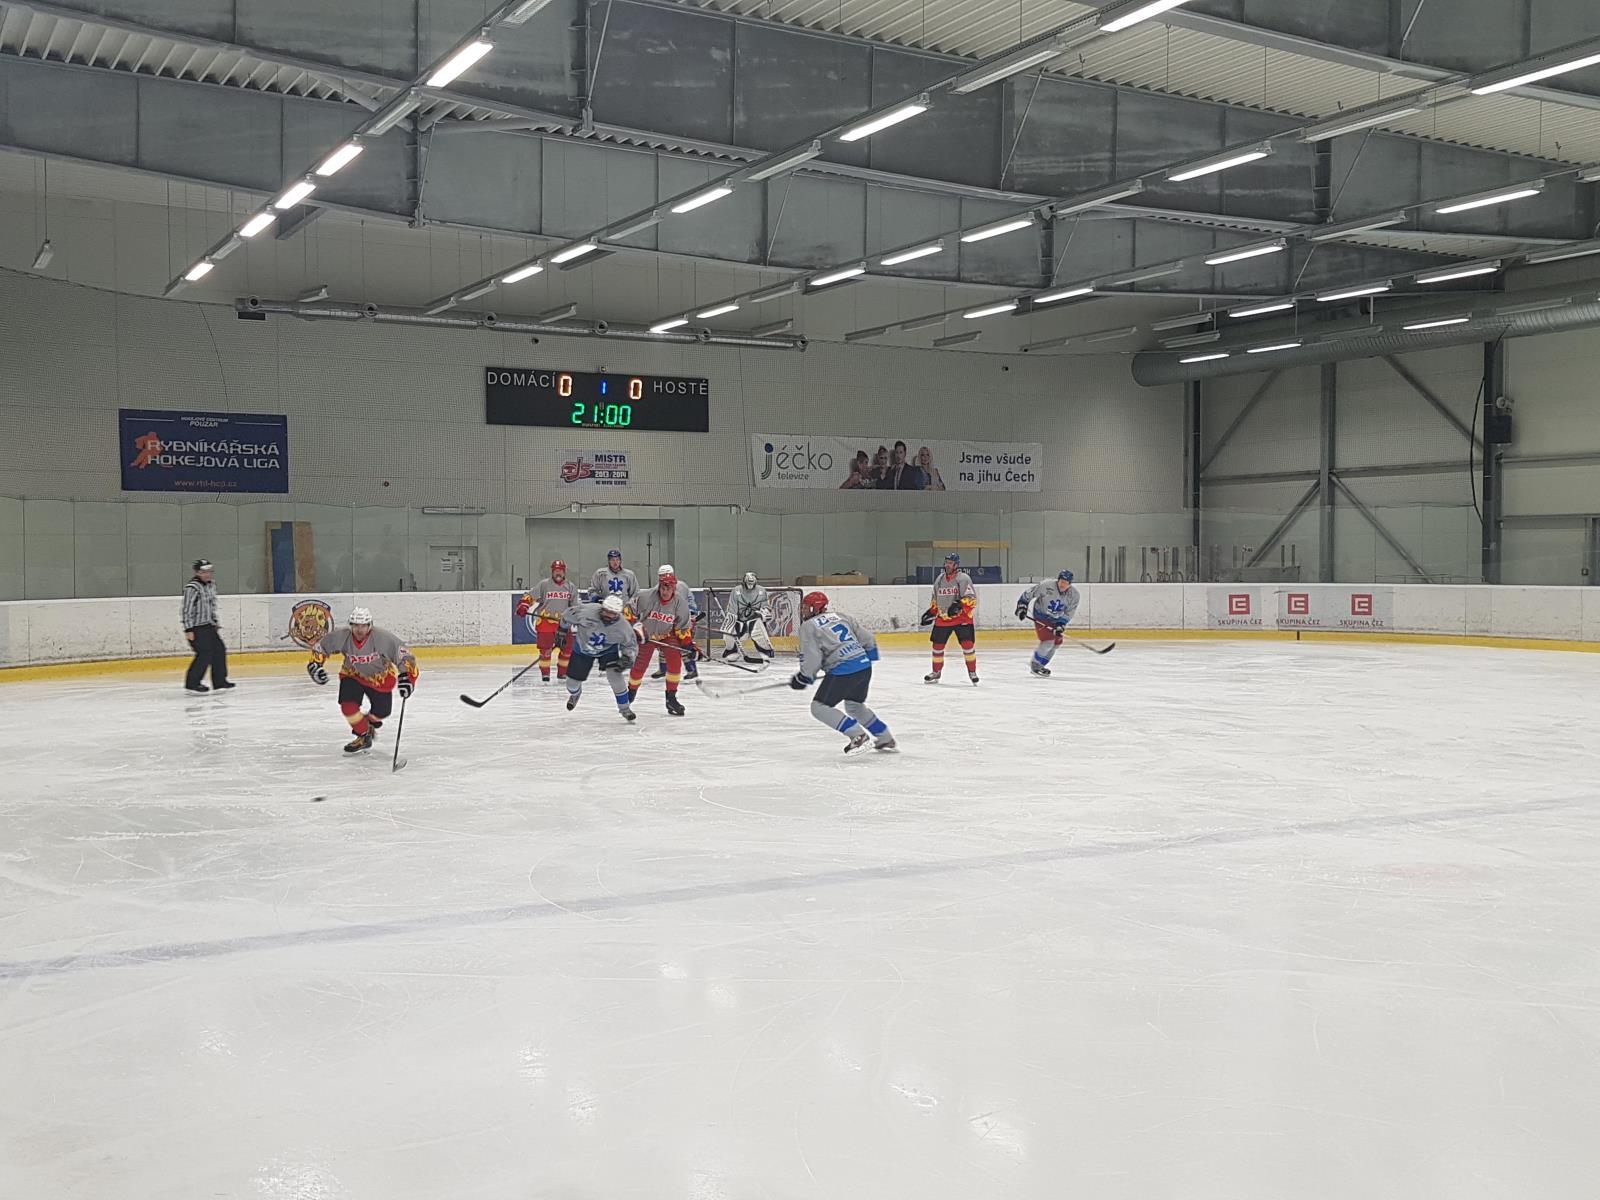 Hokejový turnaj IZS, České Budějovice - 17. 4. 2019 (5).jpg